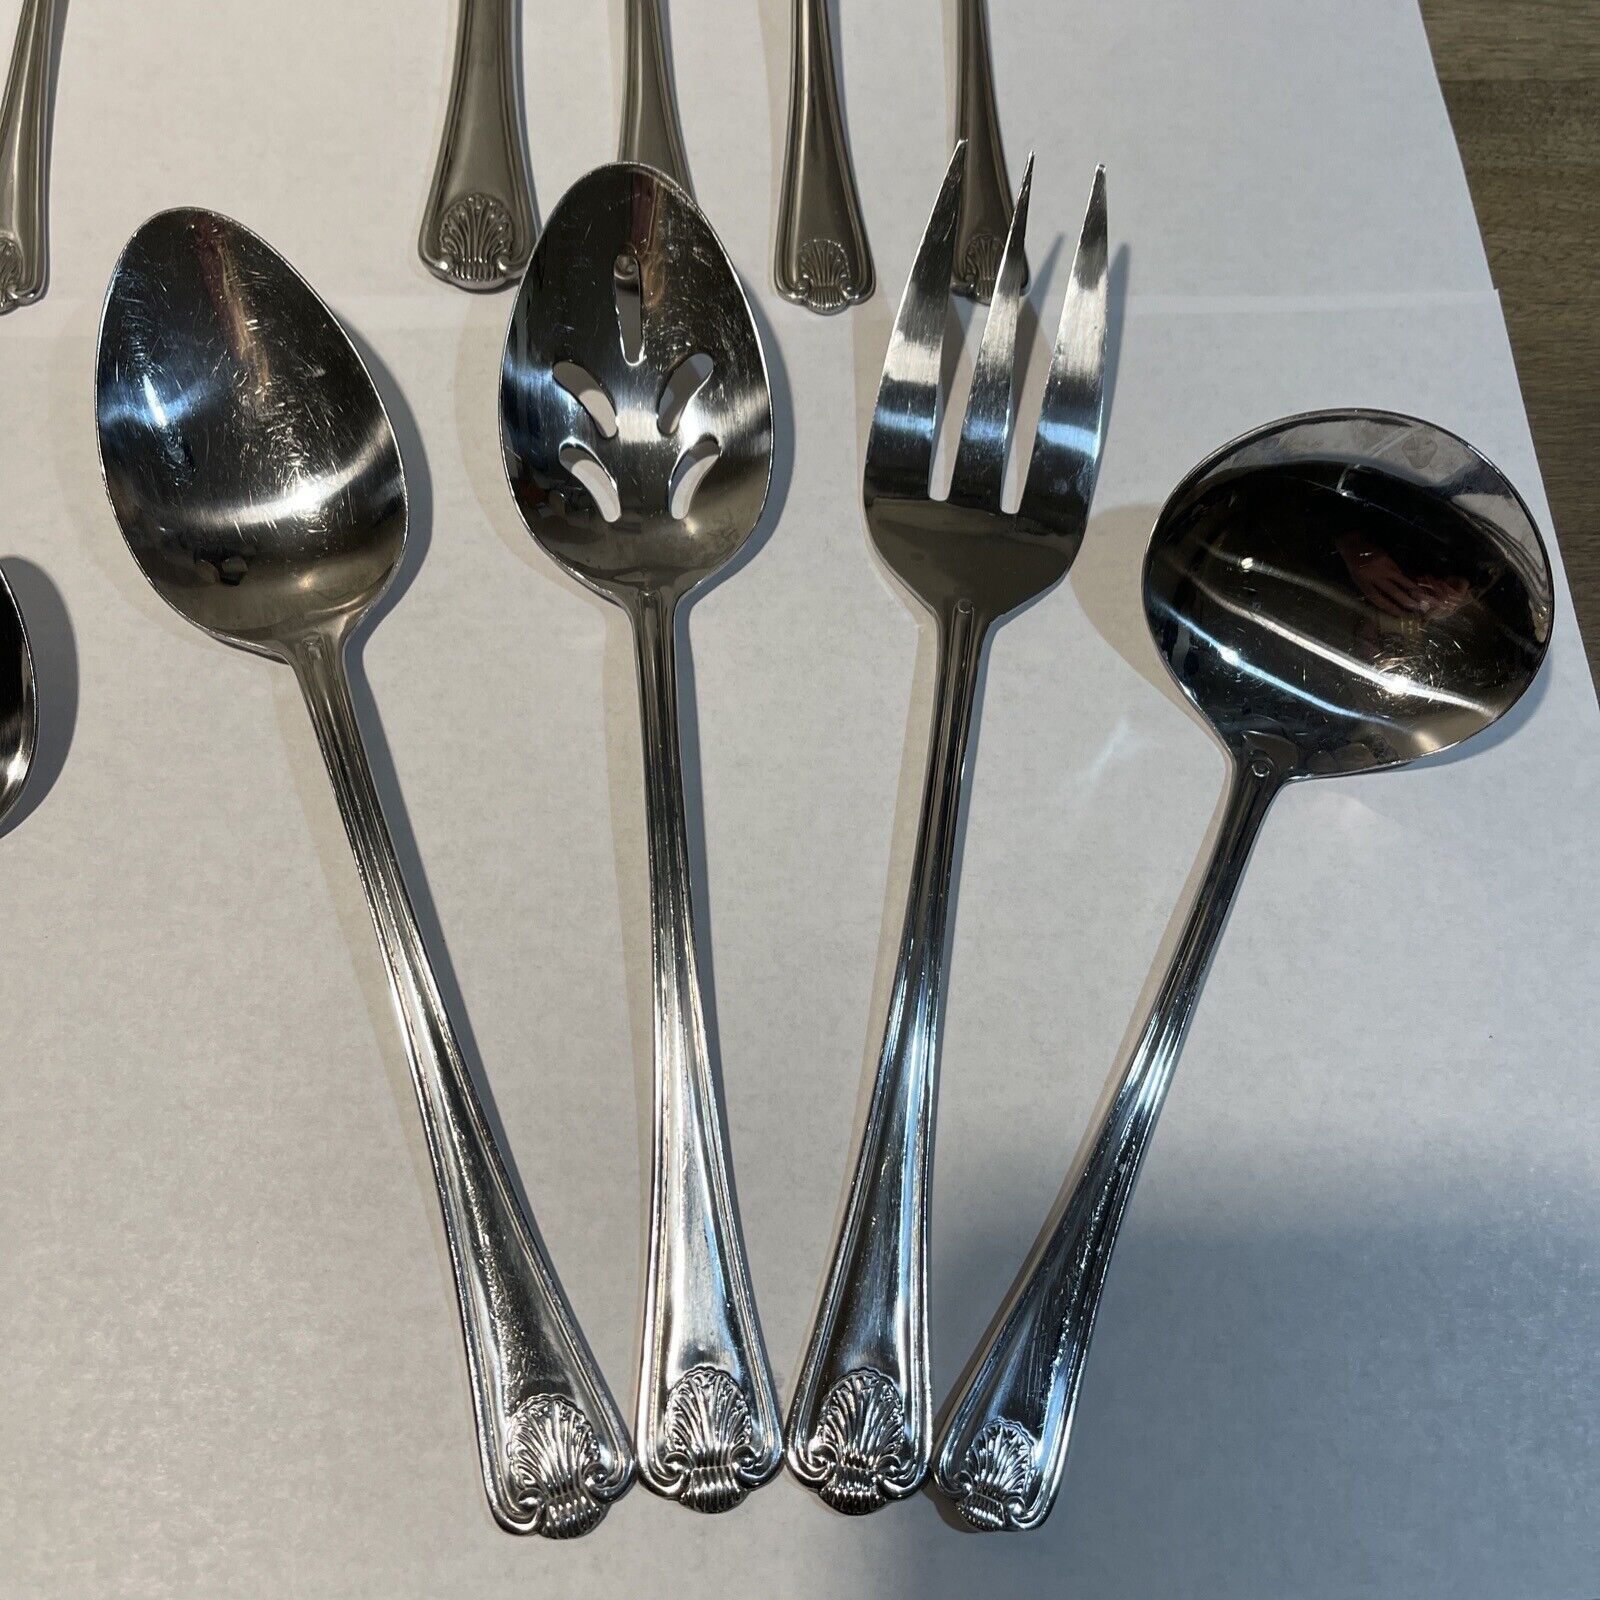 Lot of 40 Vintage Stainless Steel Flatware Silverware Korea Knives Forks Spoons